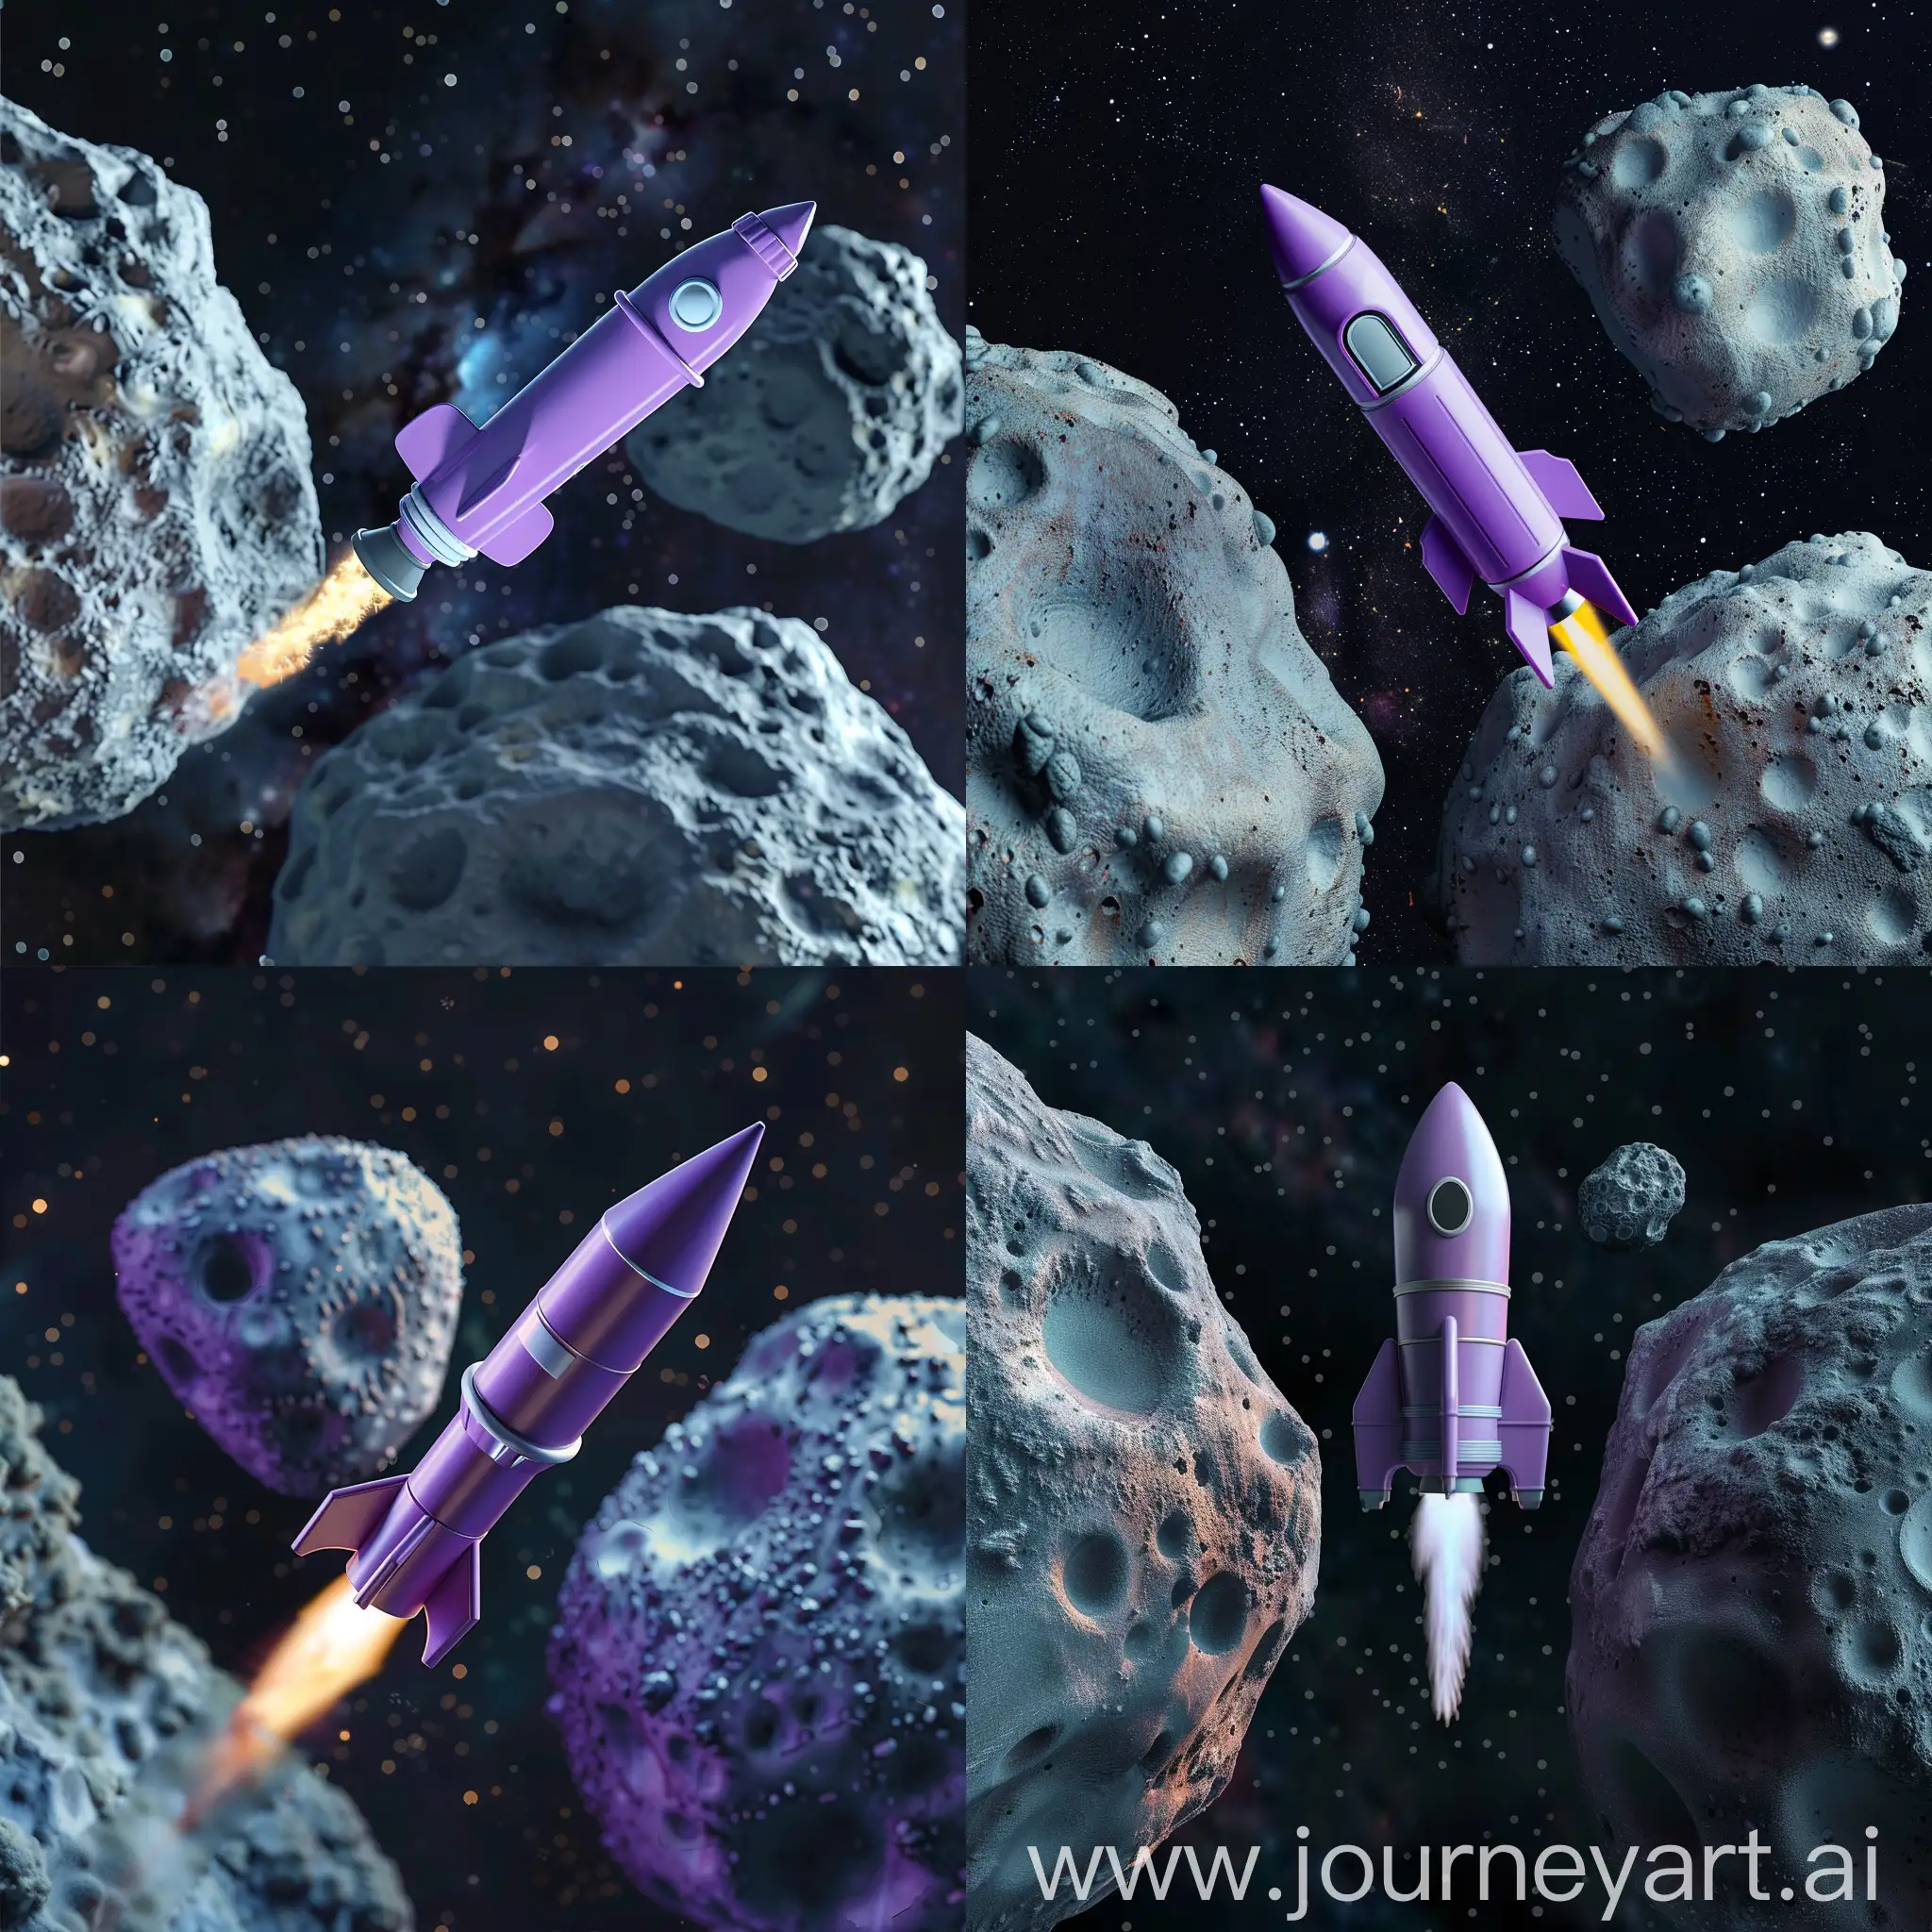 Toy-Purple-Rocket-Flying-Between-Two-Huge-Asteroids-in-Space